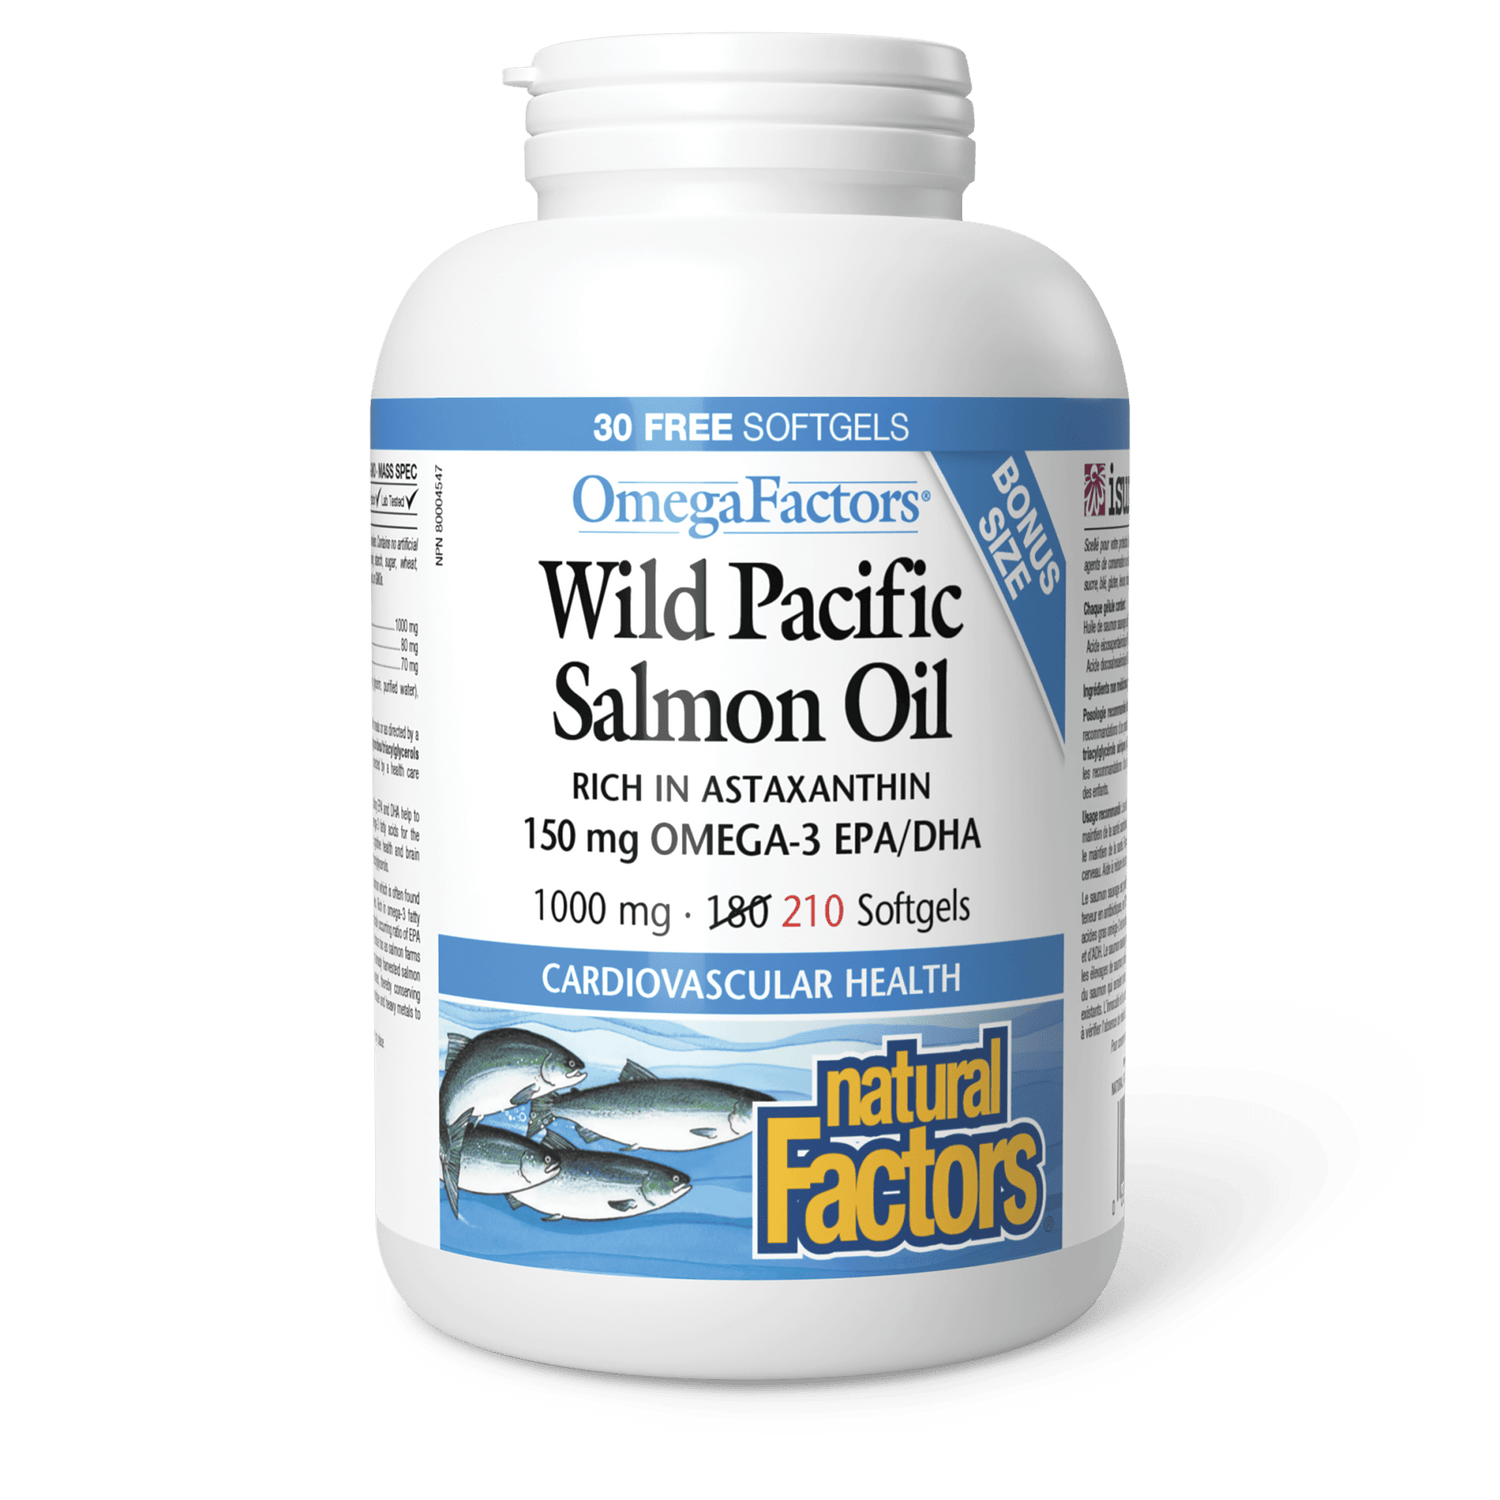 Wild Pacific Salmon Oil 1000 mg, OmegaFactors, Natural Factors|v|image|8225